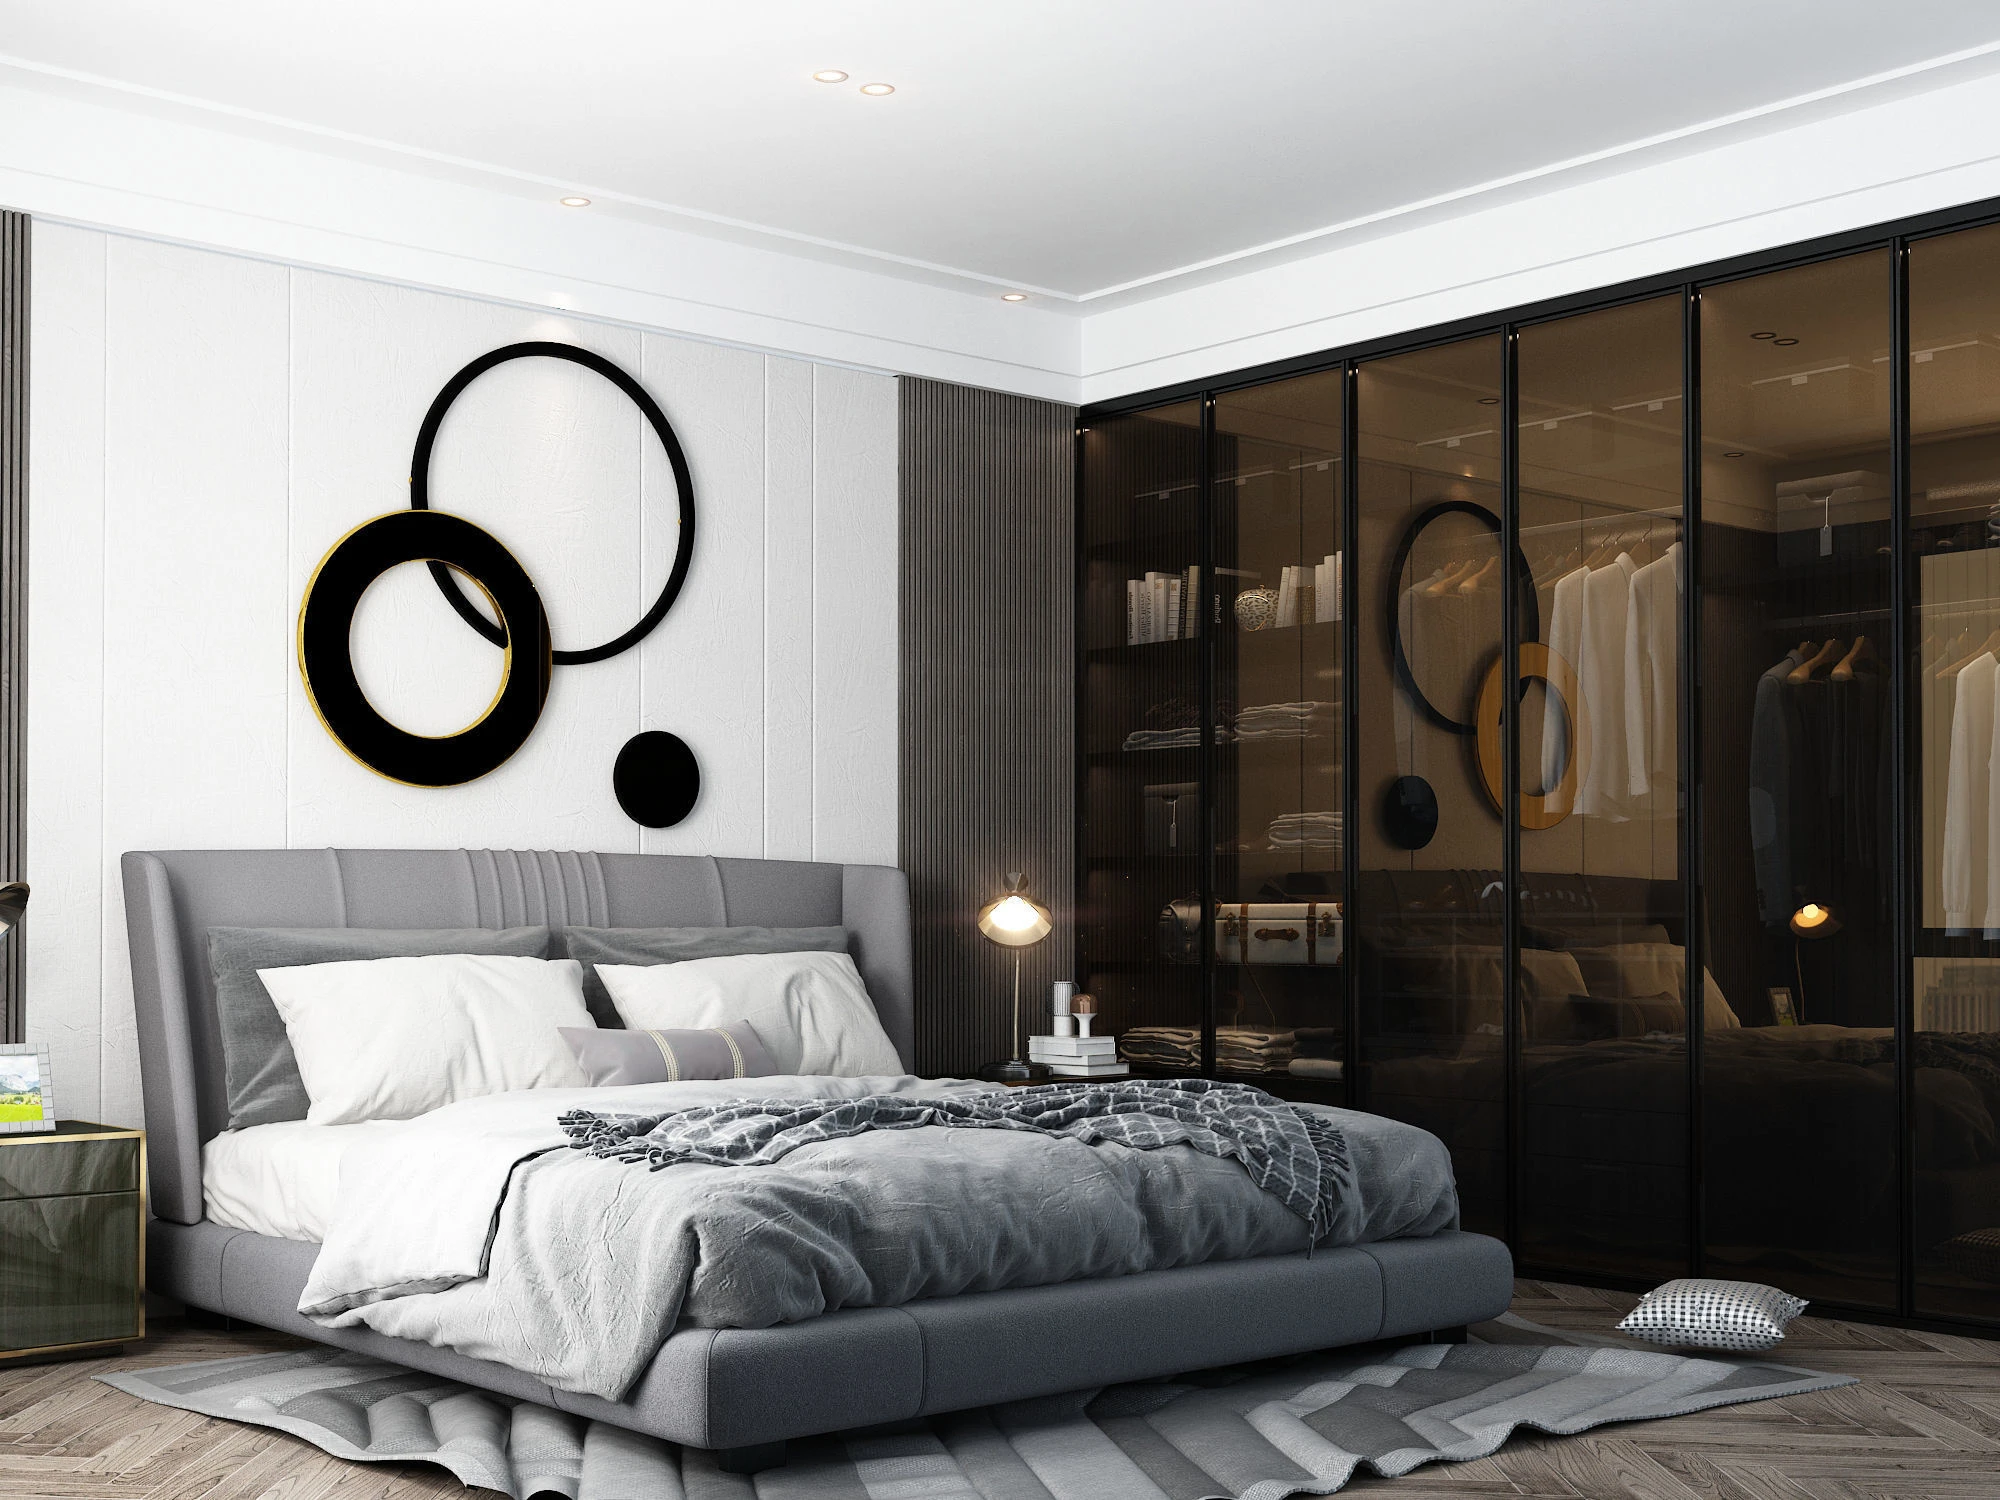 165-modern-chinese-bedroom-with-wardrobe-display-interior-design-3d-model-max-obj-3d-17070604682.jpg